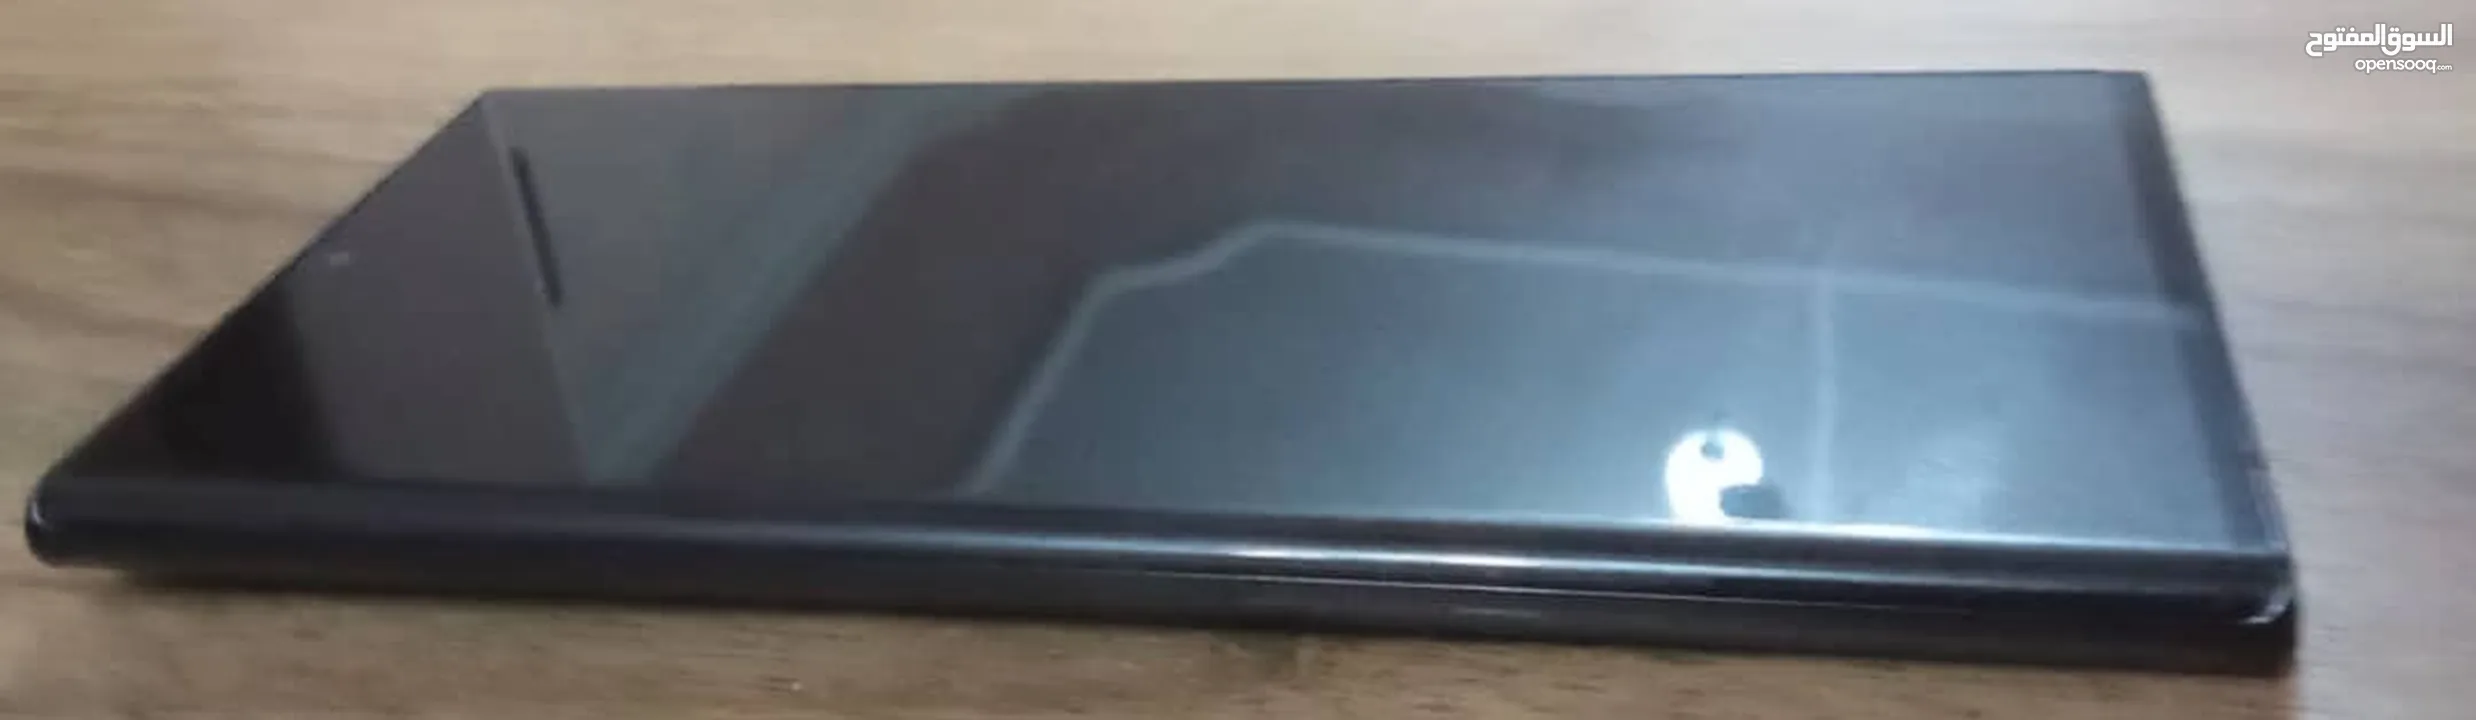 Galaxy Note 20 Ultra 5G